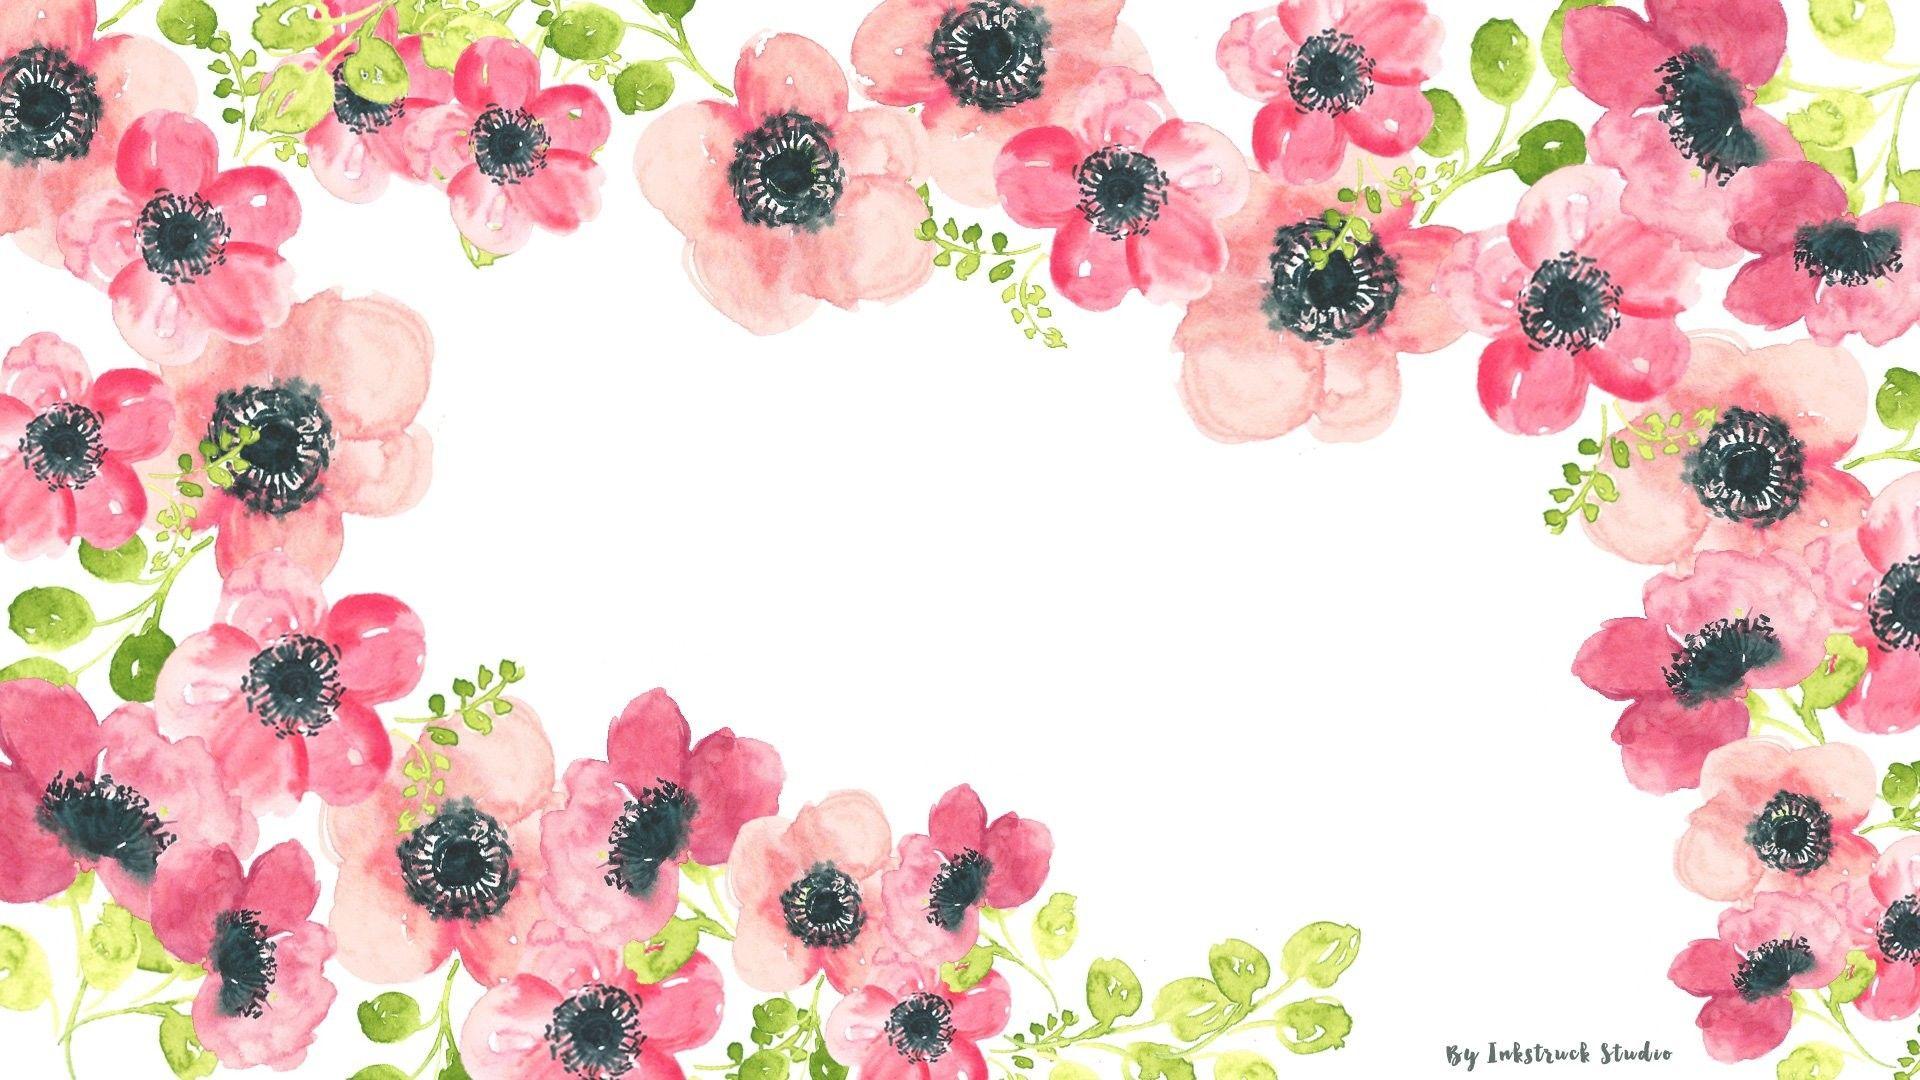 34465 Floral Desktop Wallpaper Images Stock Photos  Vectors   Shutterstock